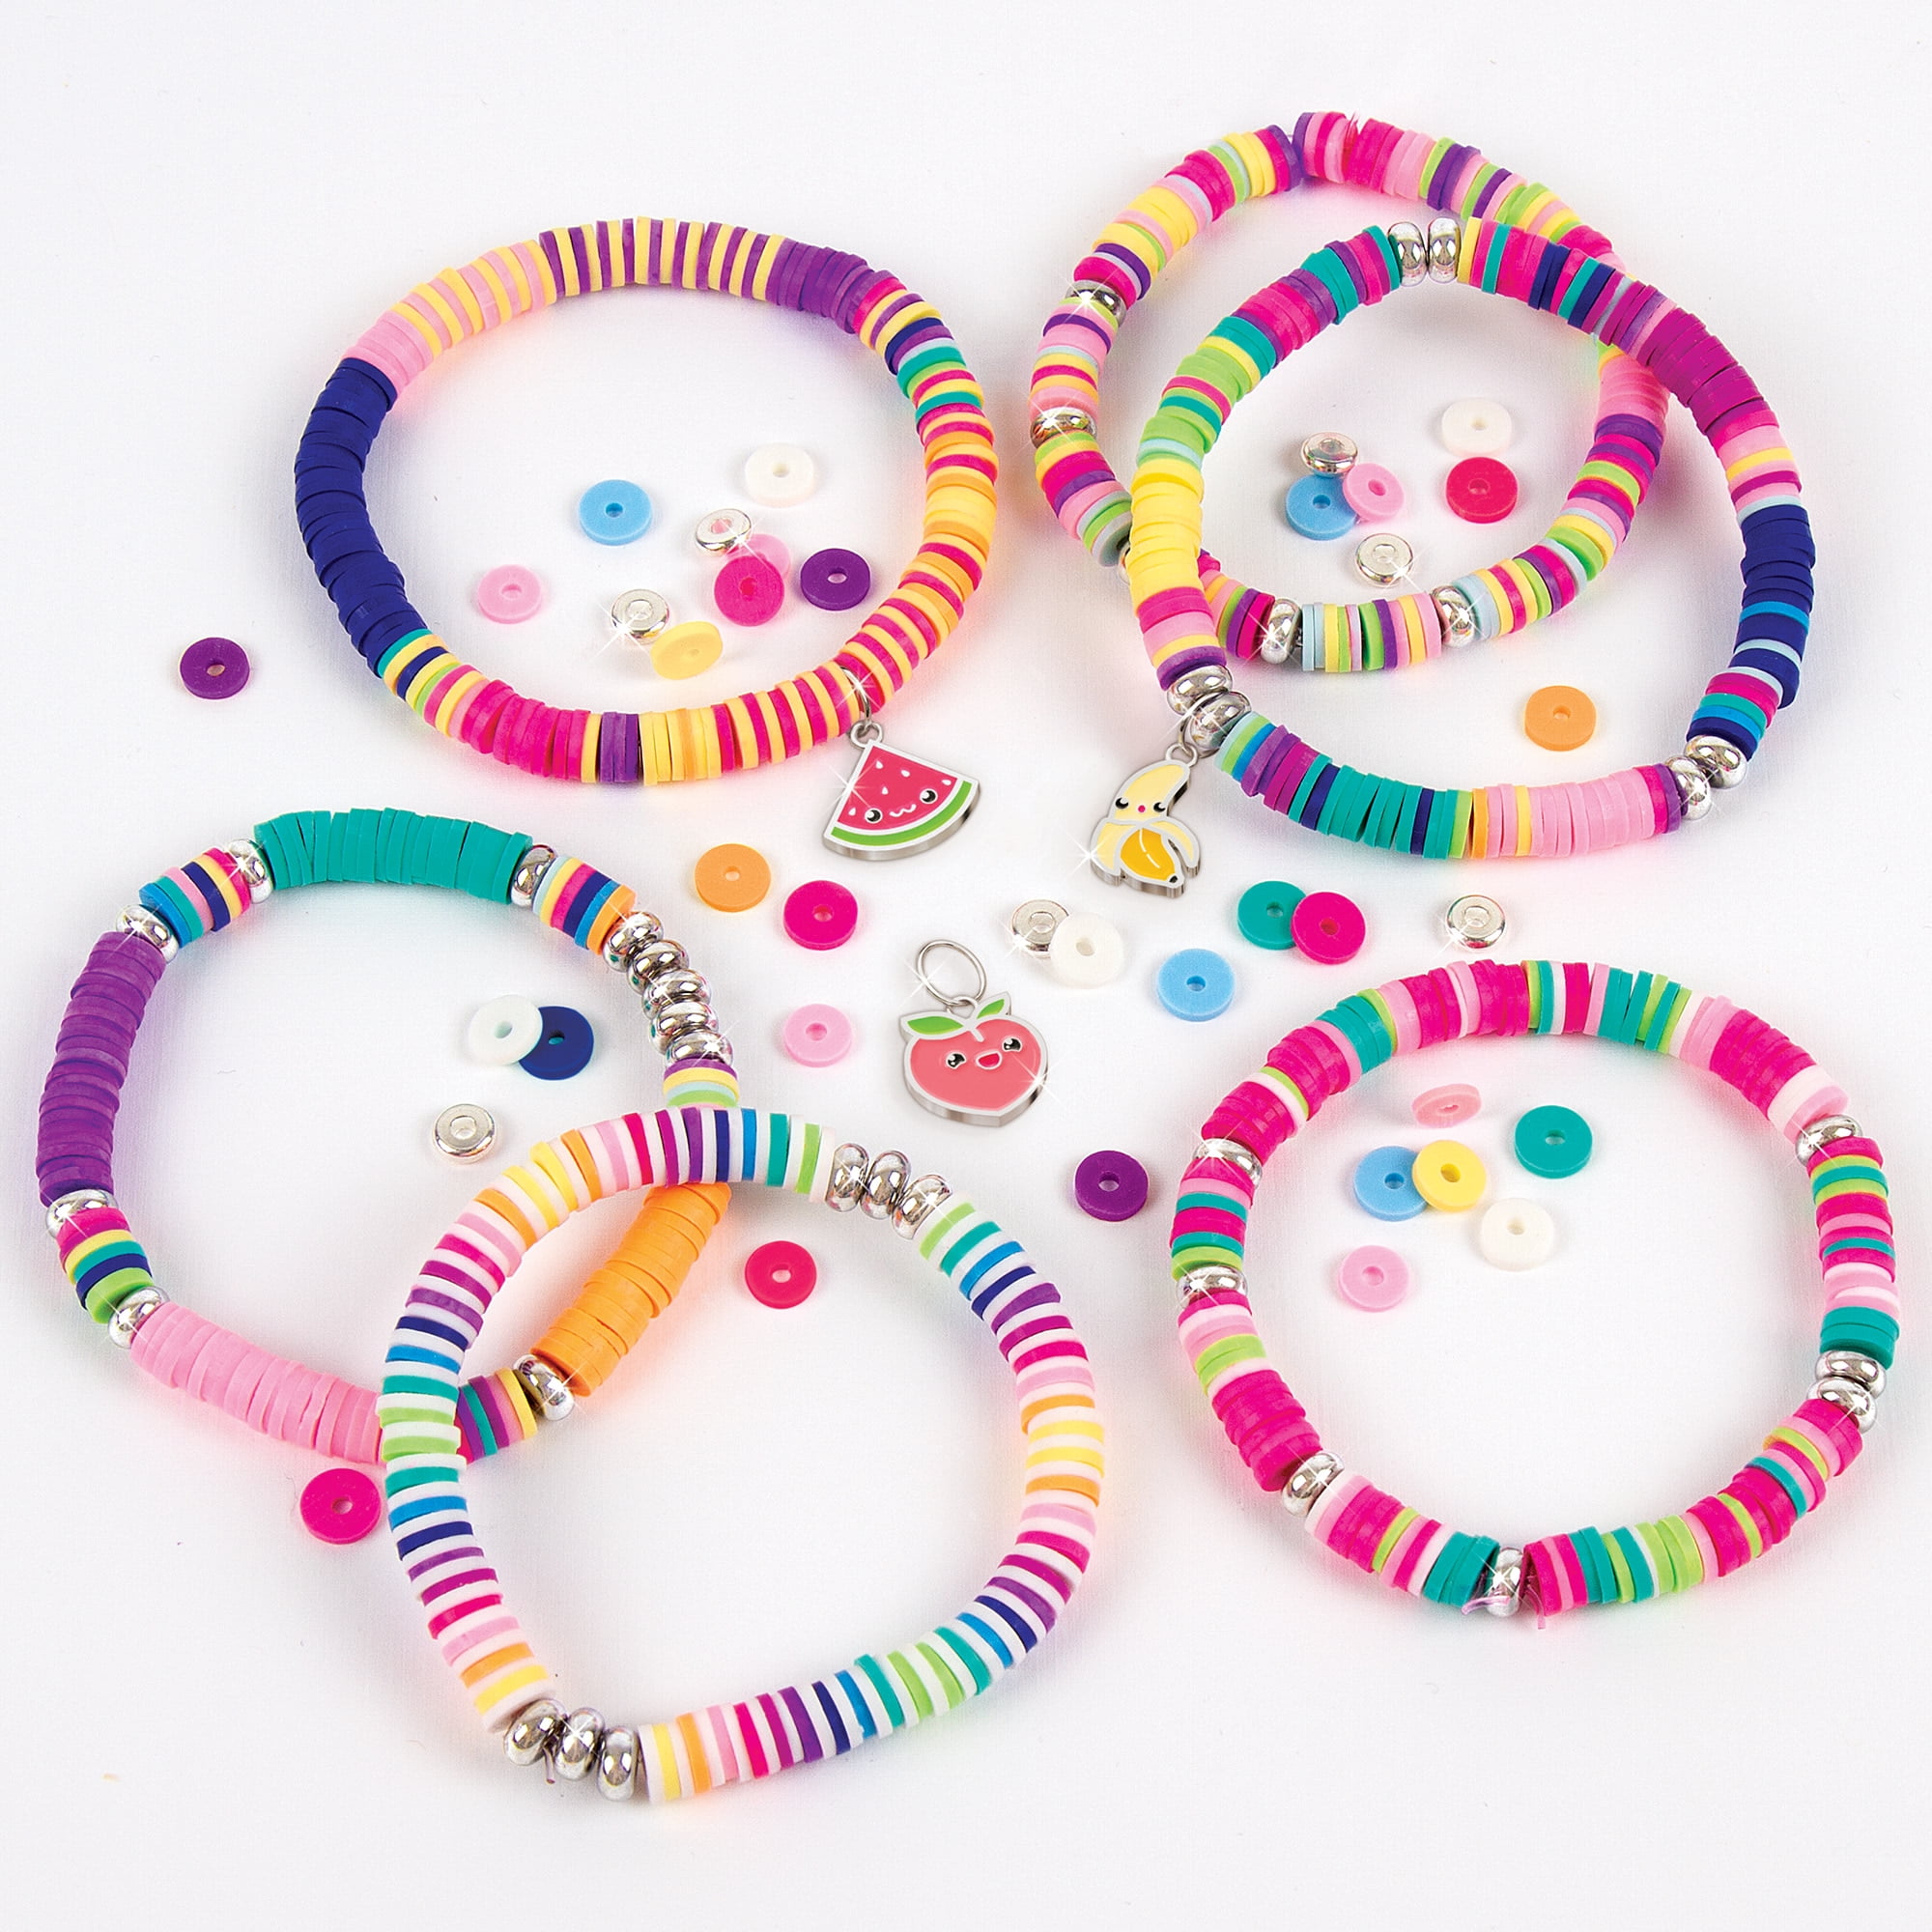 Make It Real - Summer Vibes Heishi Bead Bracelets - DIY Charm Bracelet  Making Kit with Case - Friendship Bracelet Kit with Beads, Charms & Thread  